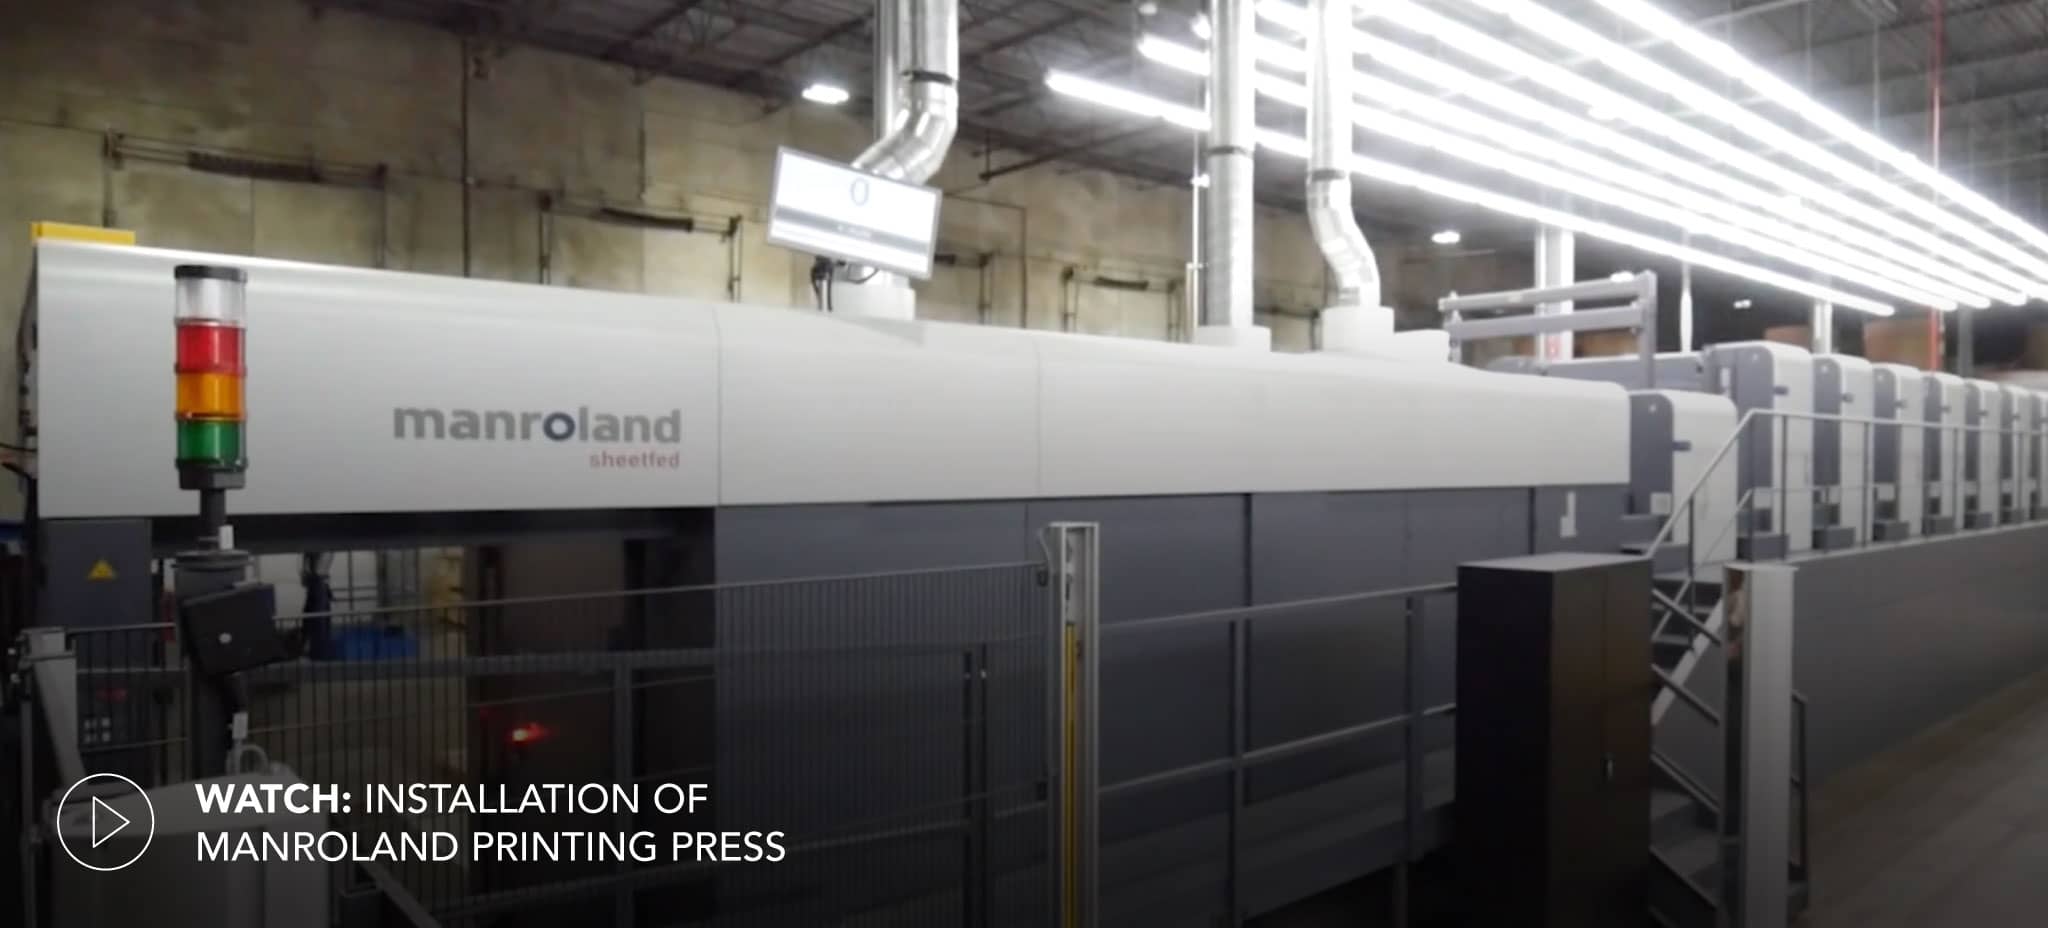 Watch: Installation of Manroland priniting press